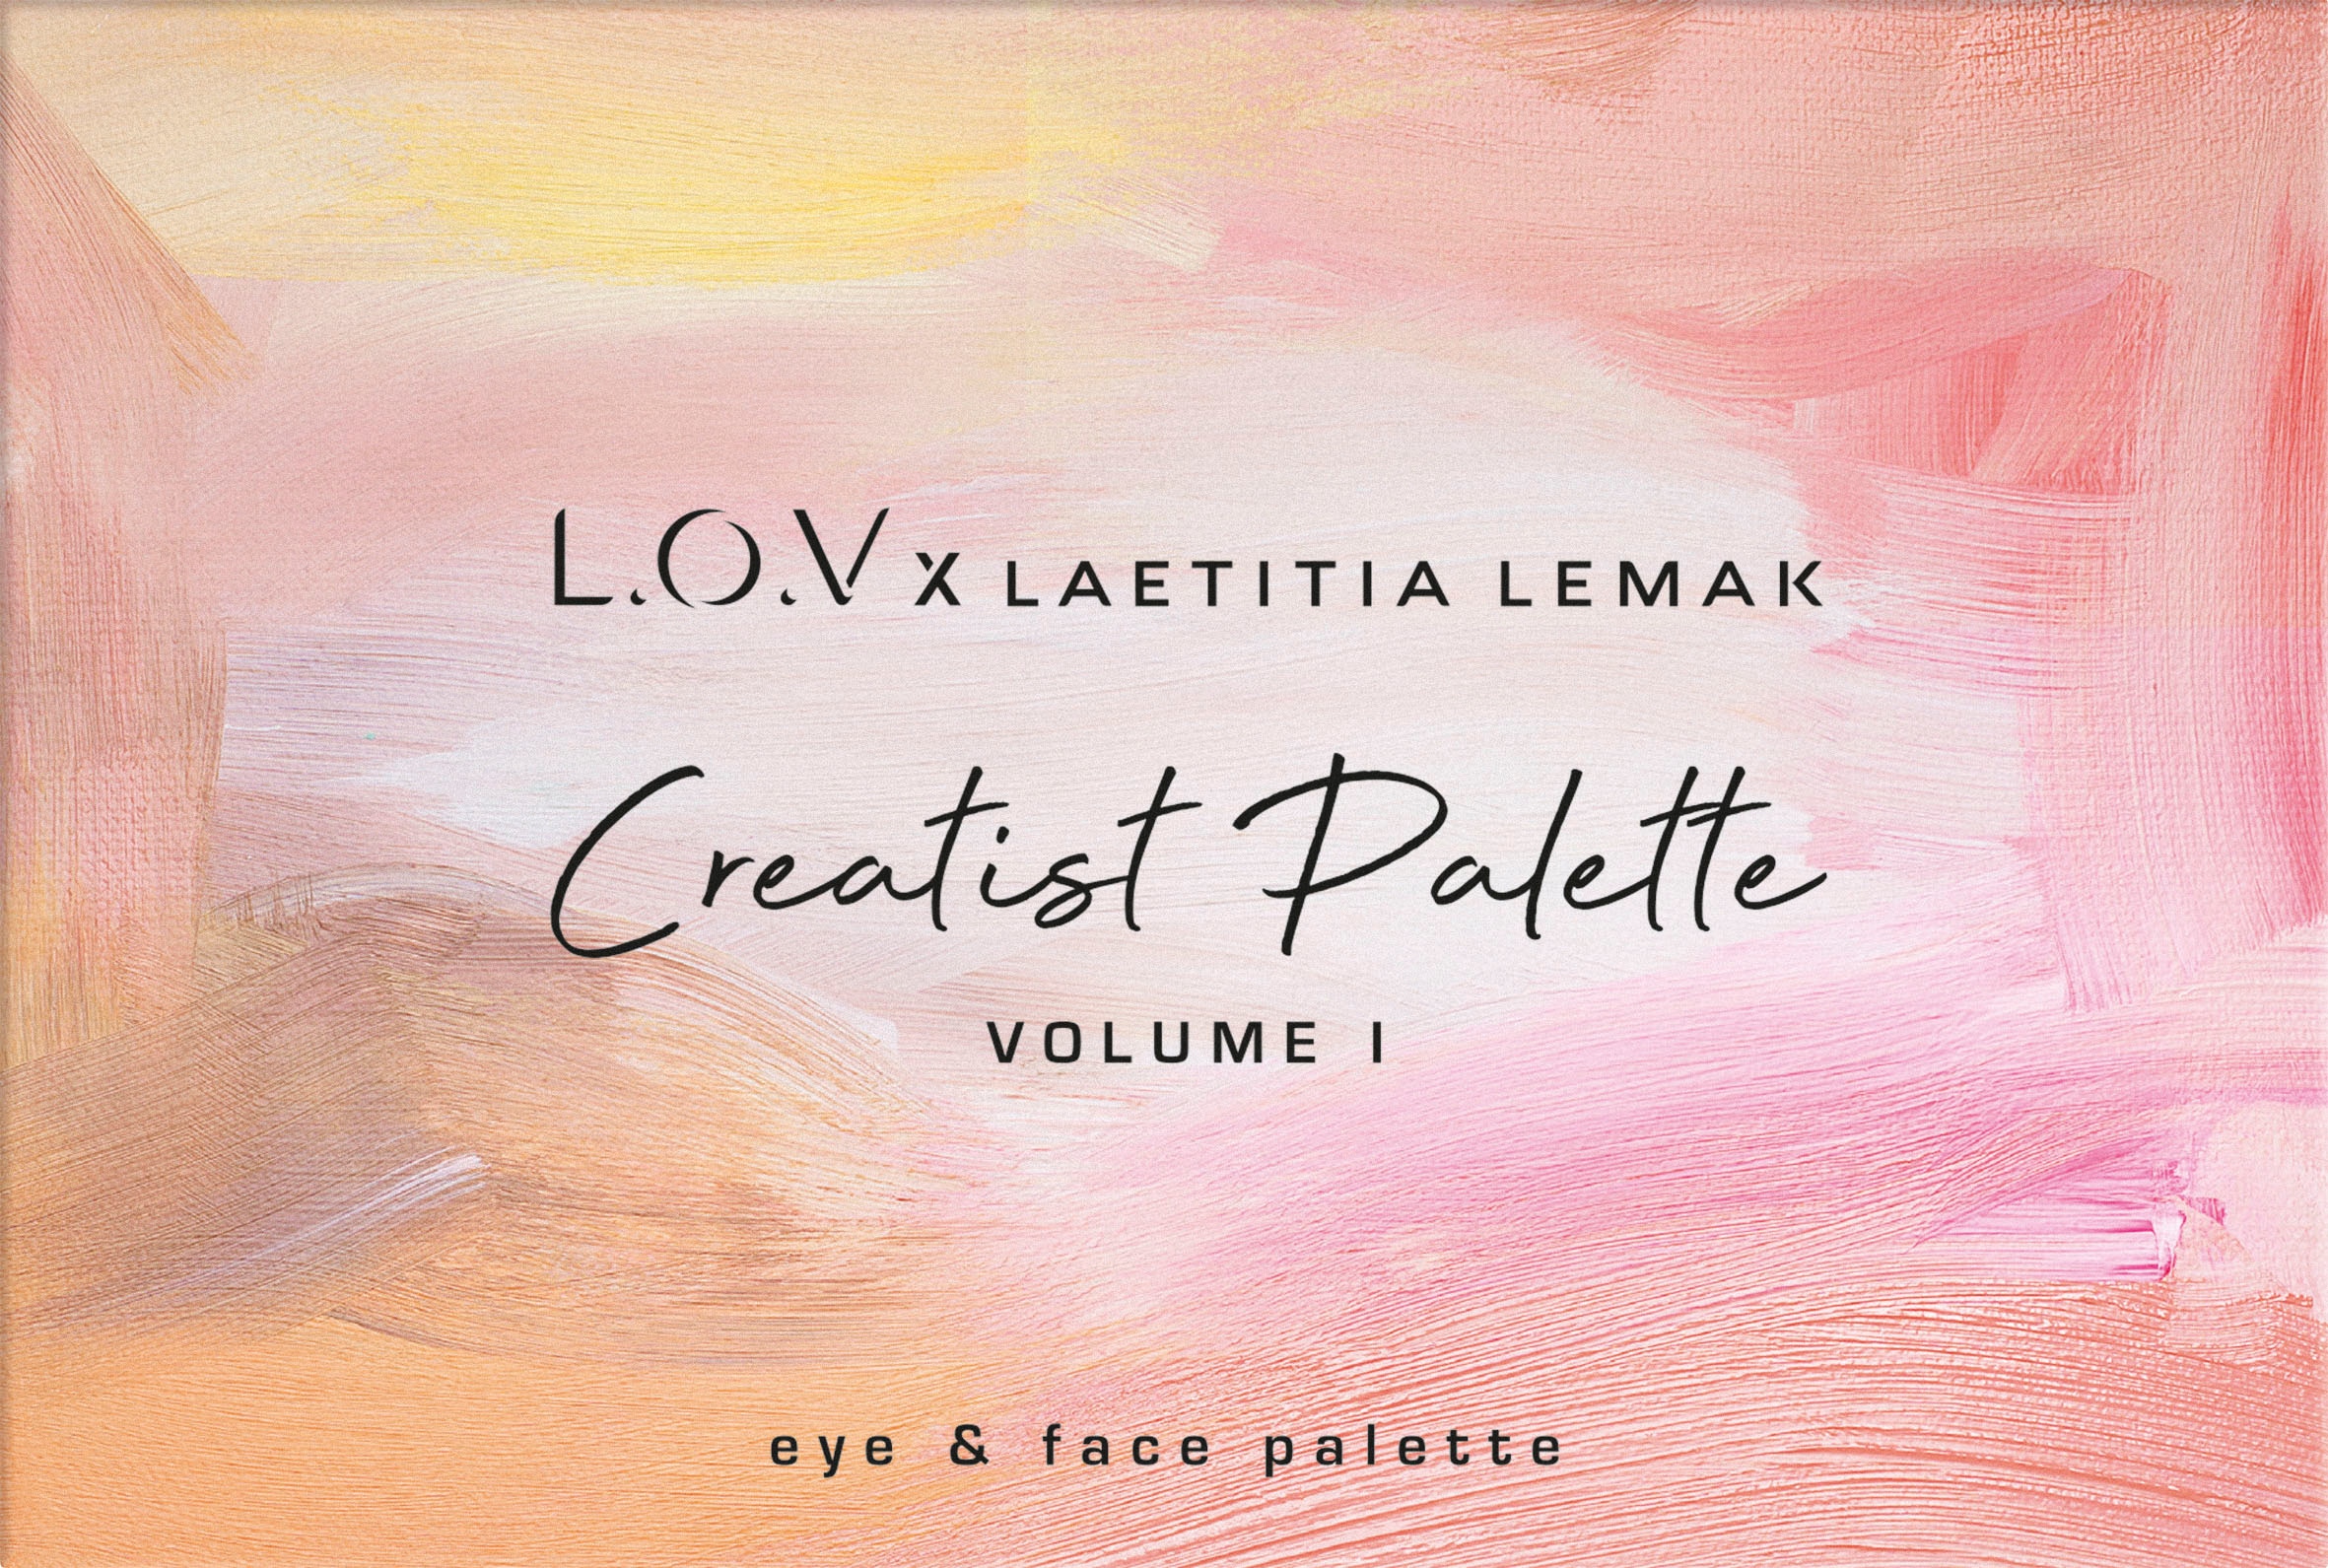 x palette« Lidschatten-Palette »L.O.V I OTTO Volume face LAETITIA CREATIST LEMAK PALETTE kaufen & L.O.V bei eye